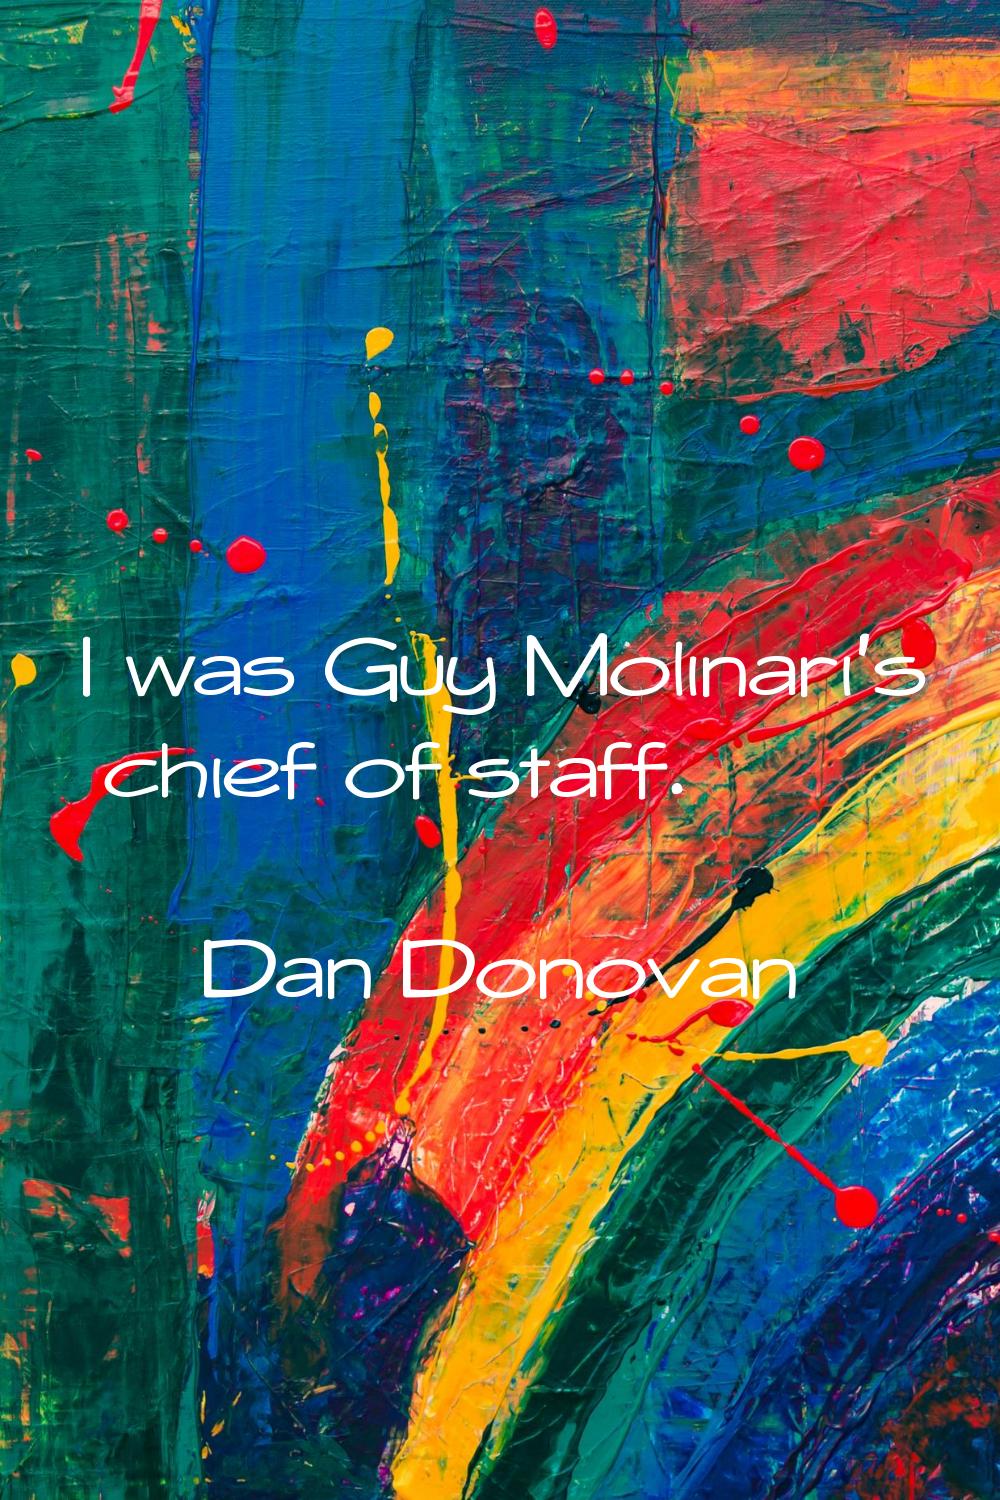 I was Guy Molinari's chief of staff.